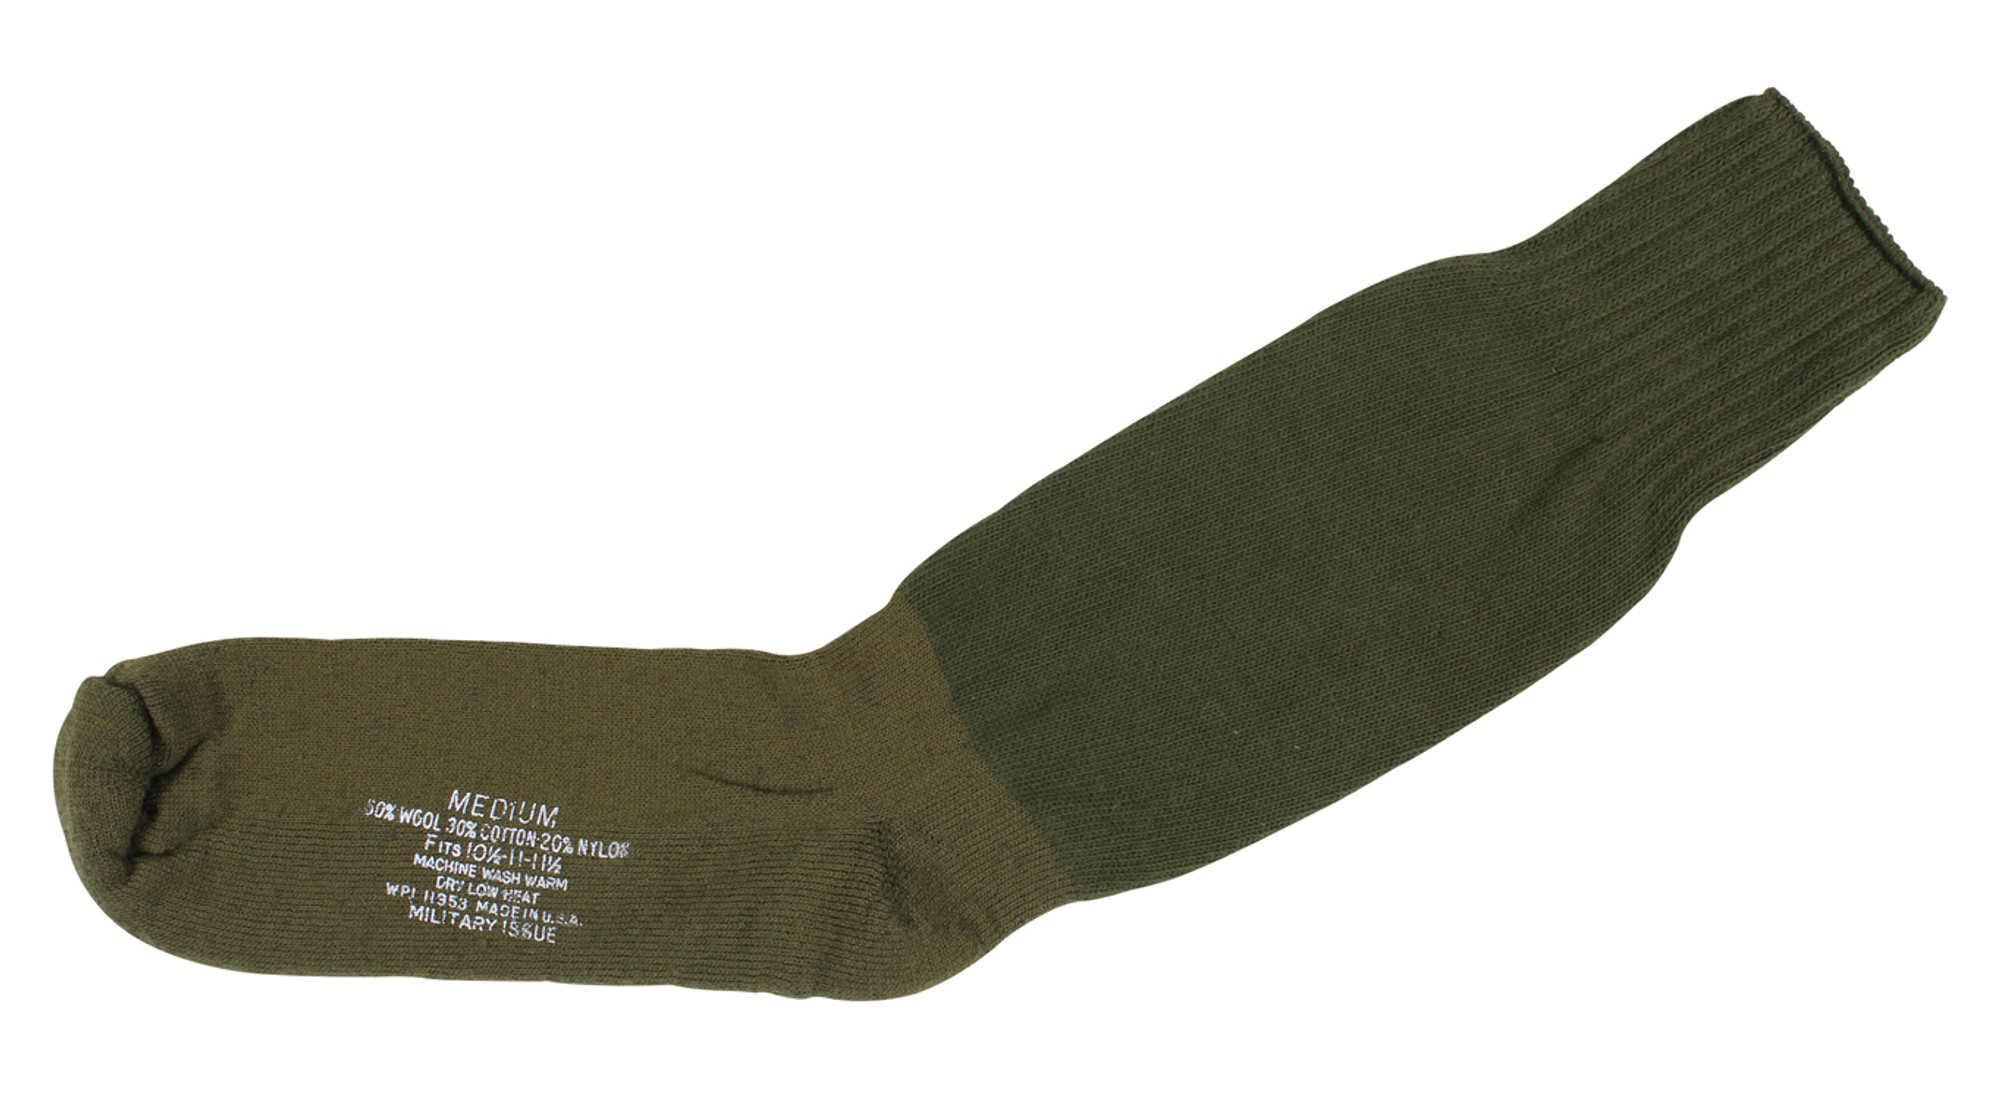 Rothco G.I. Type Cushion Sole Socks - Olive Drab